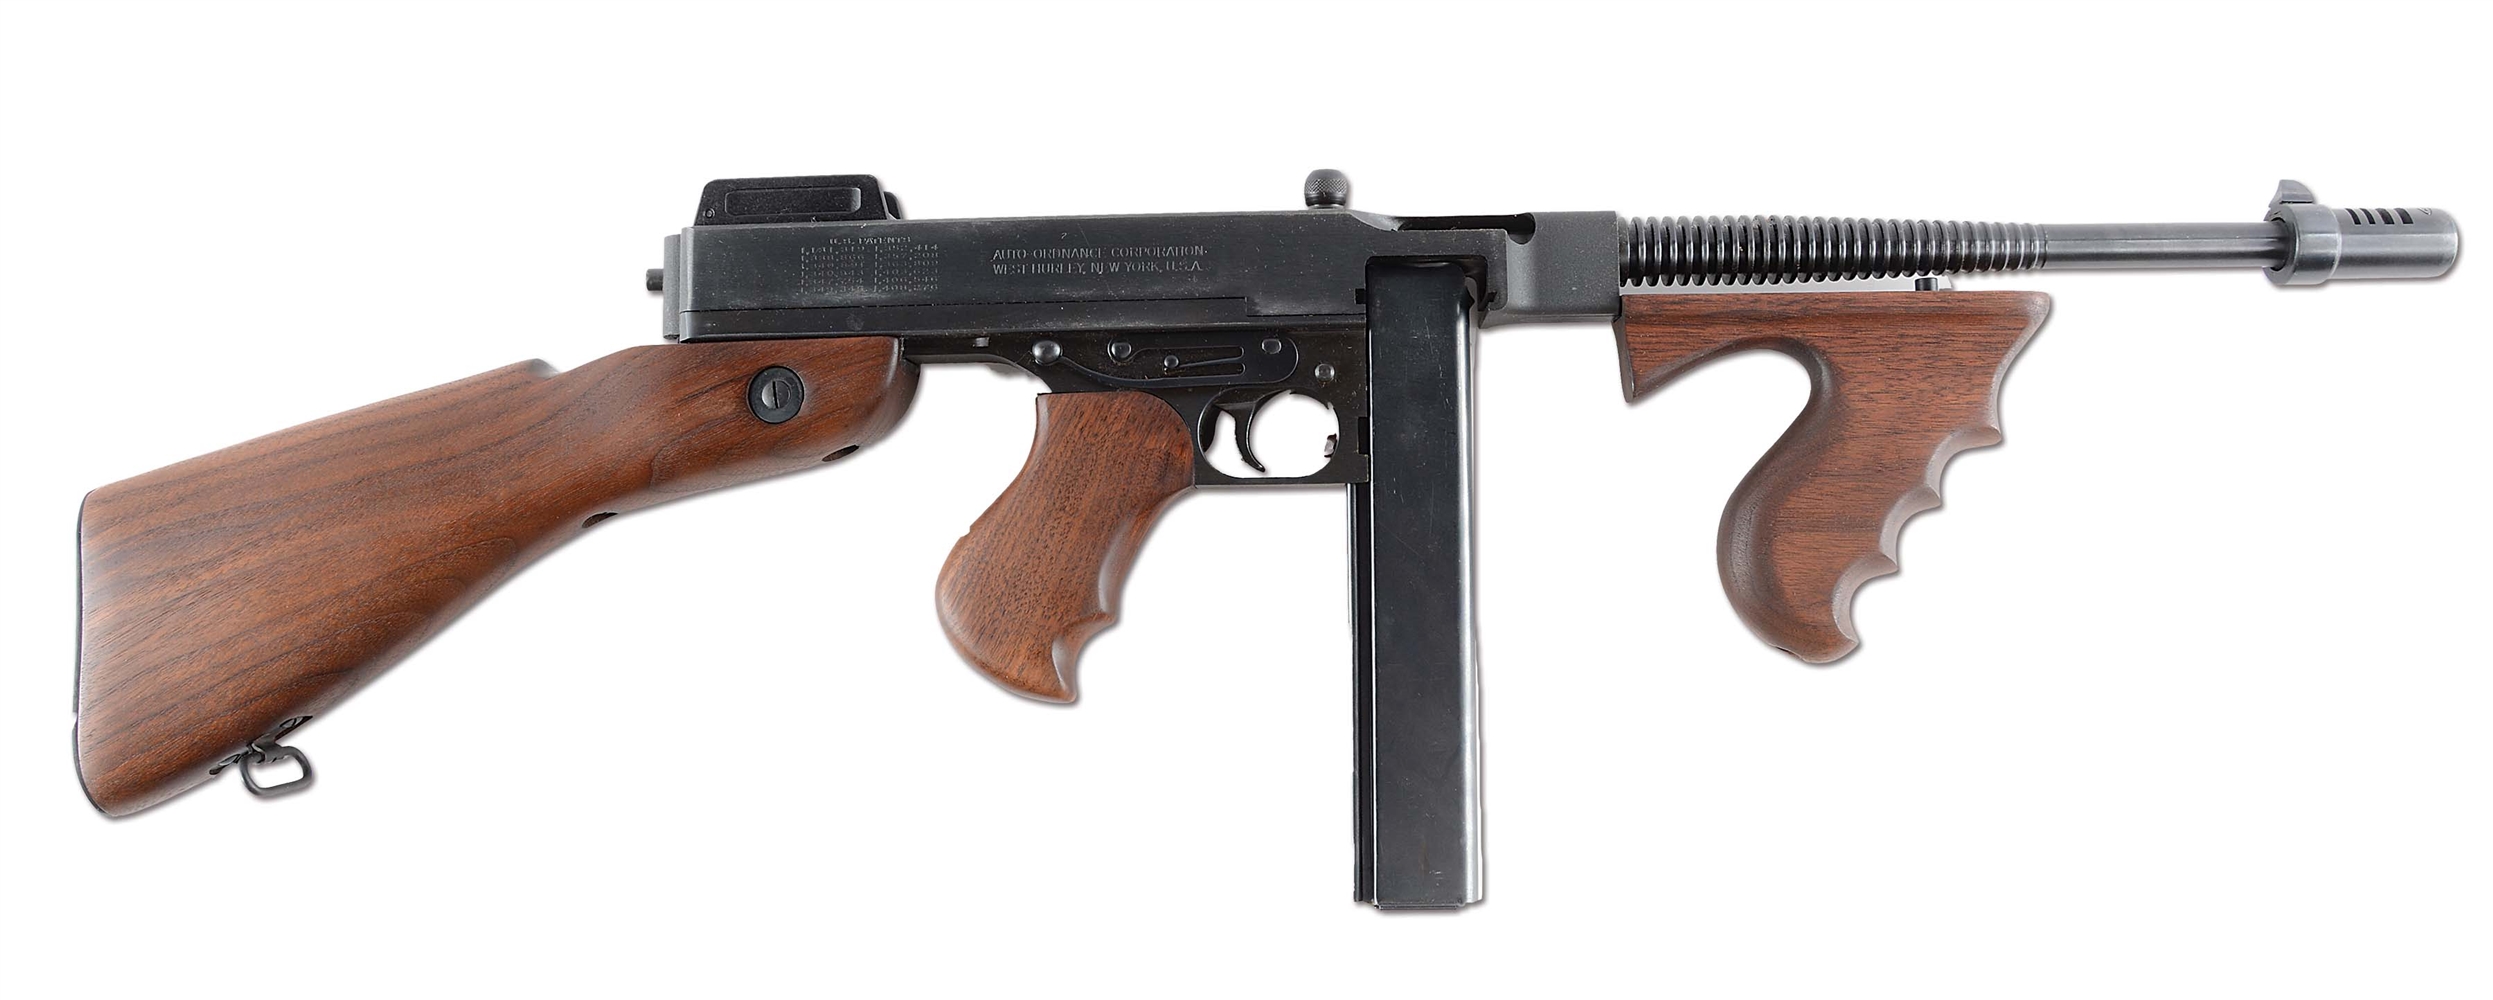 (N) INCREDIBLE NEW IN BOX AUTO ORDNANCE THOMPSON 1928 WEST HURLEY MACHINE GUN (CURIO & RELIC)